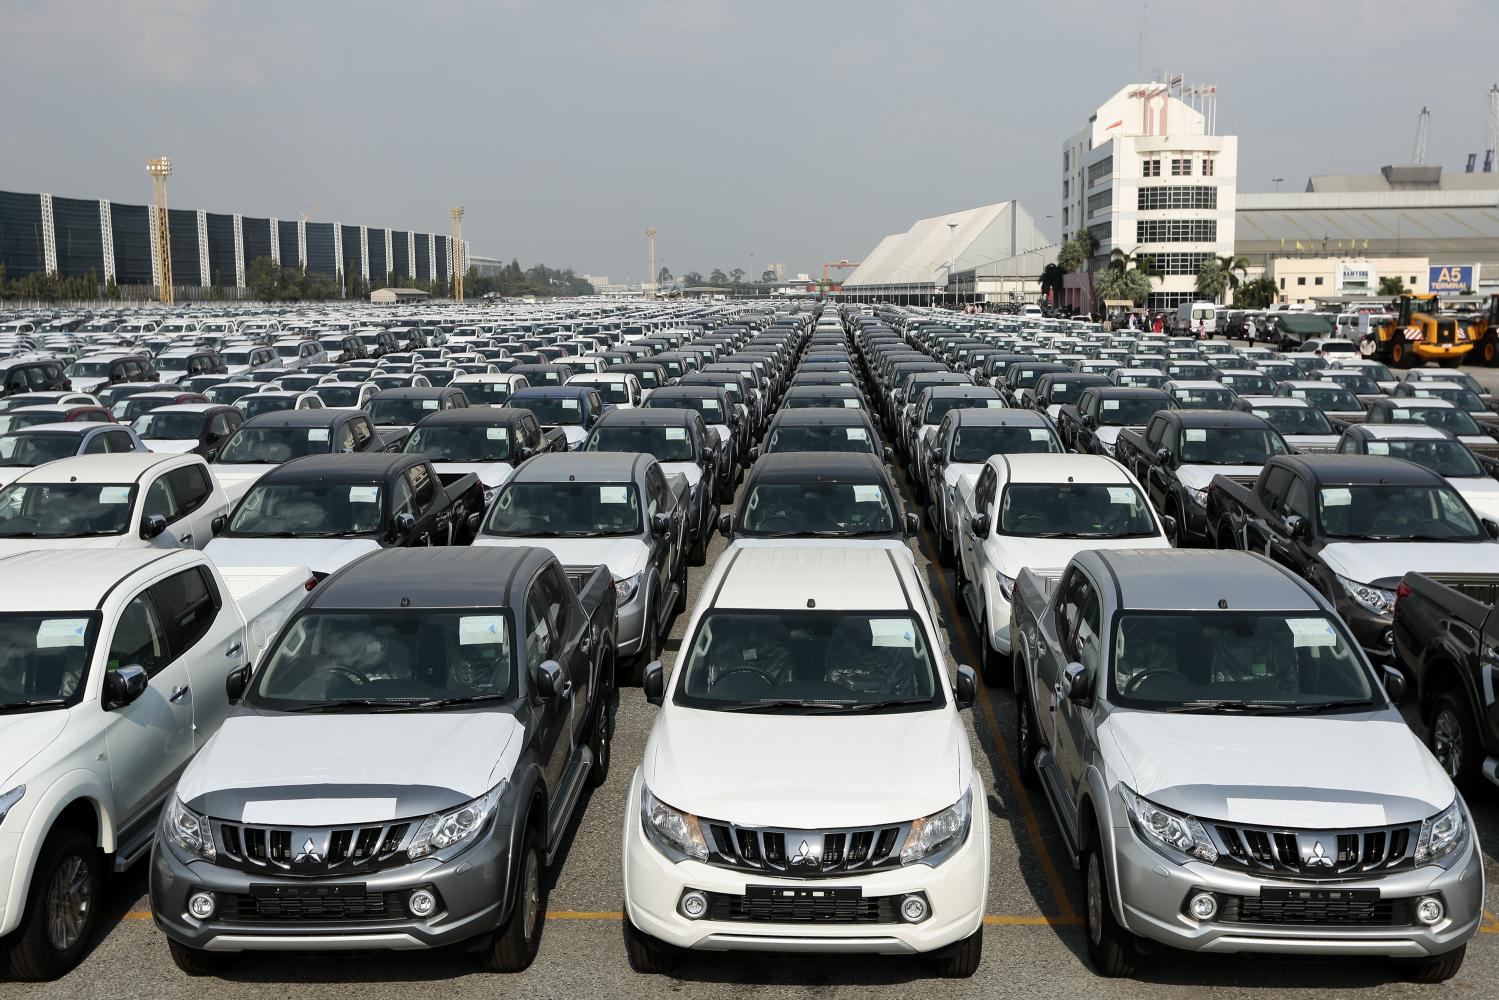 Cars await shipment at Laem Chabang port in Chon Buri province. Patipat Janthong